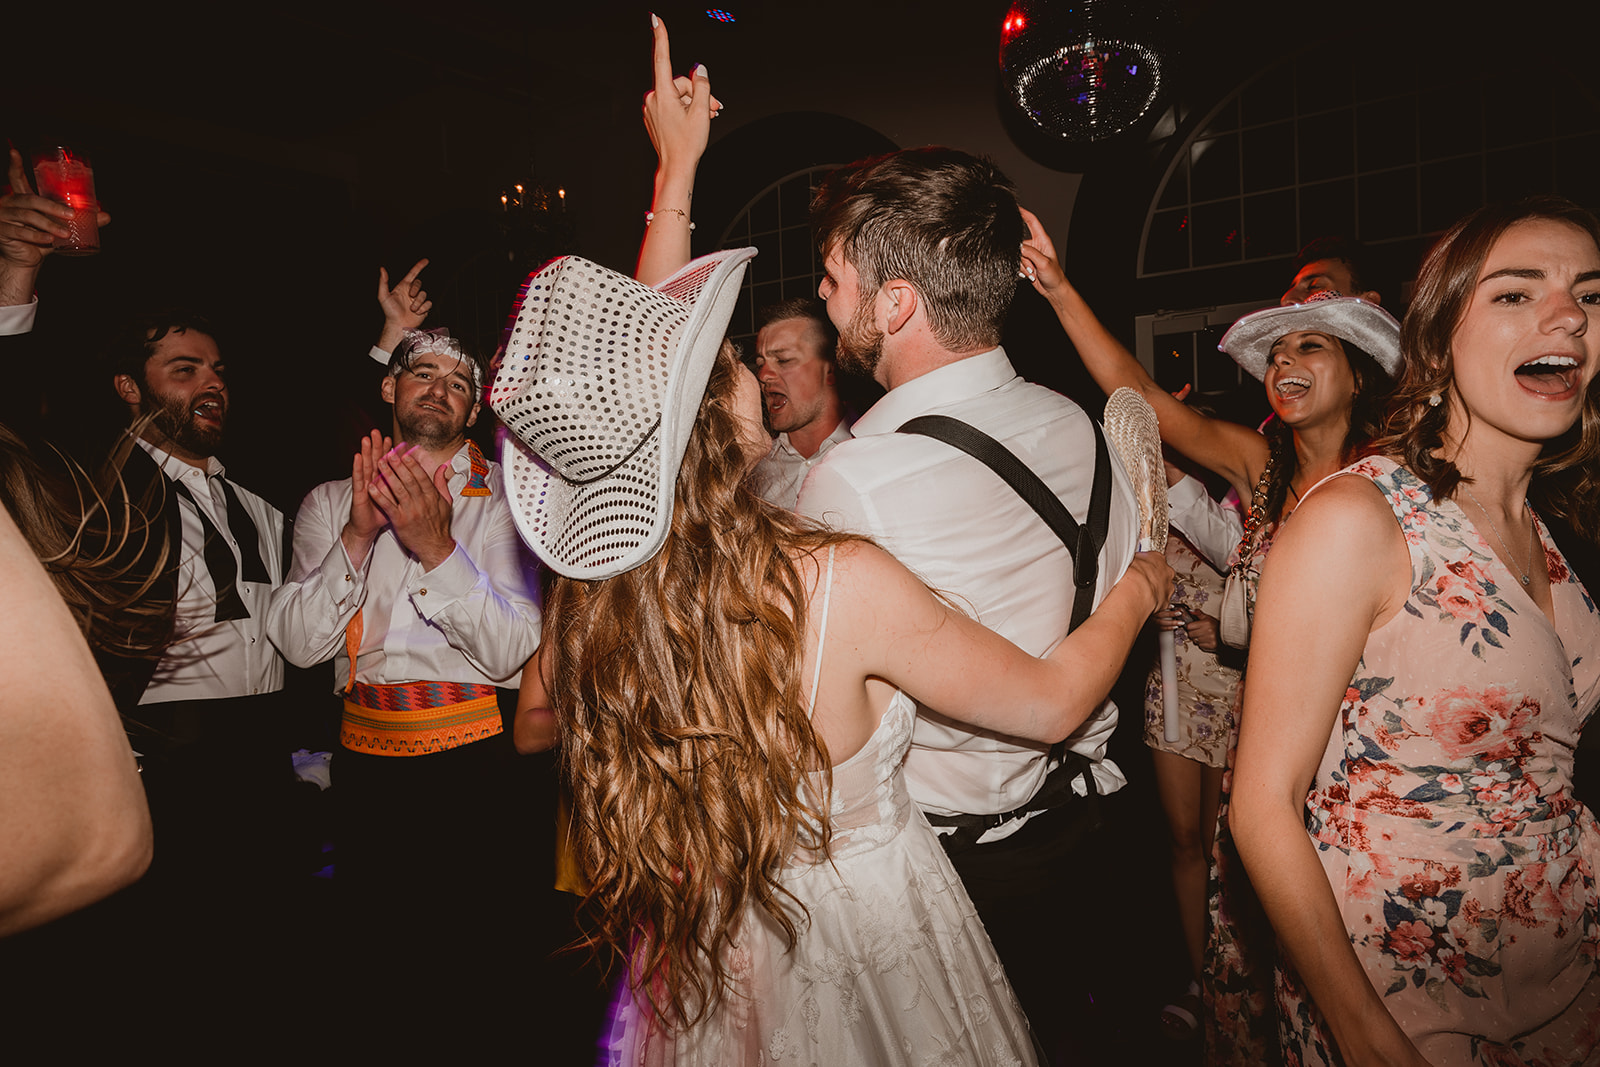 Surf Hotel Wedding Buena Vista, Colorado - Documentary Style Wedding Photography - Candid Dancing Photos